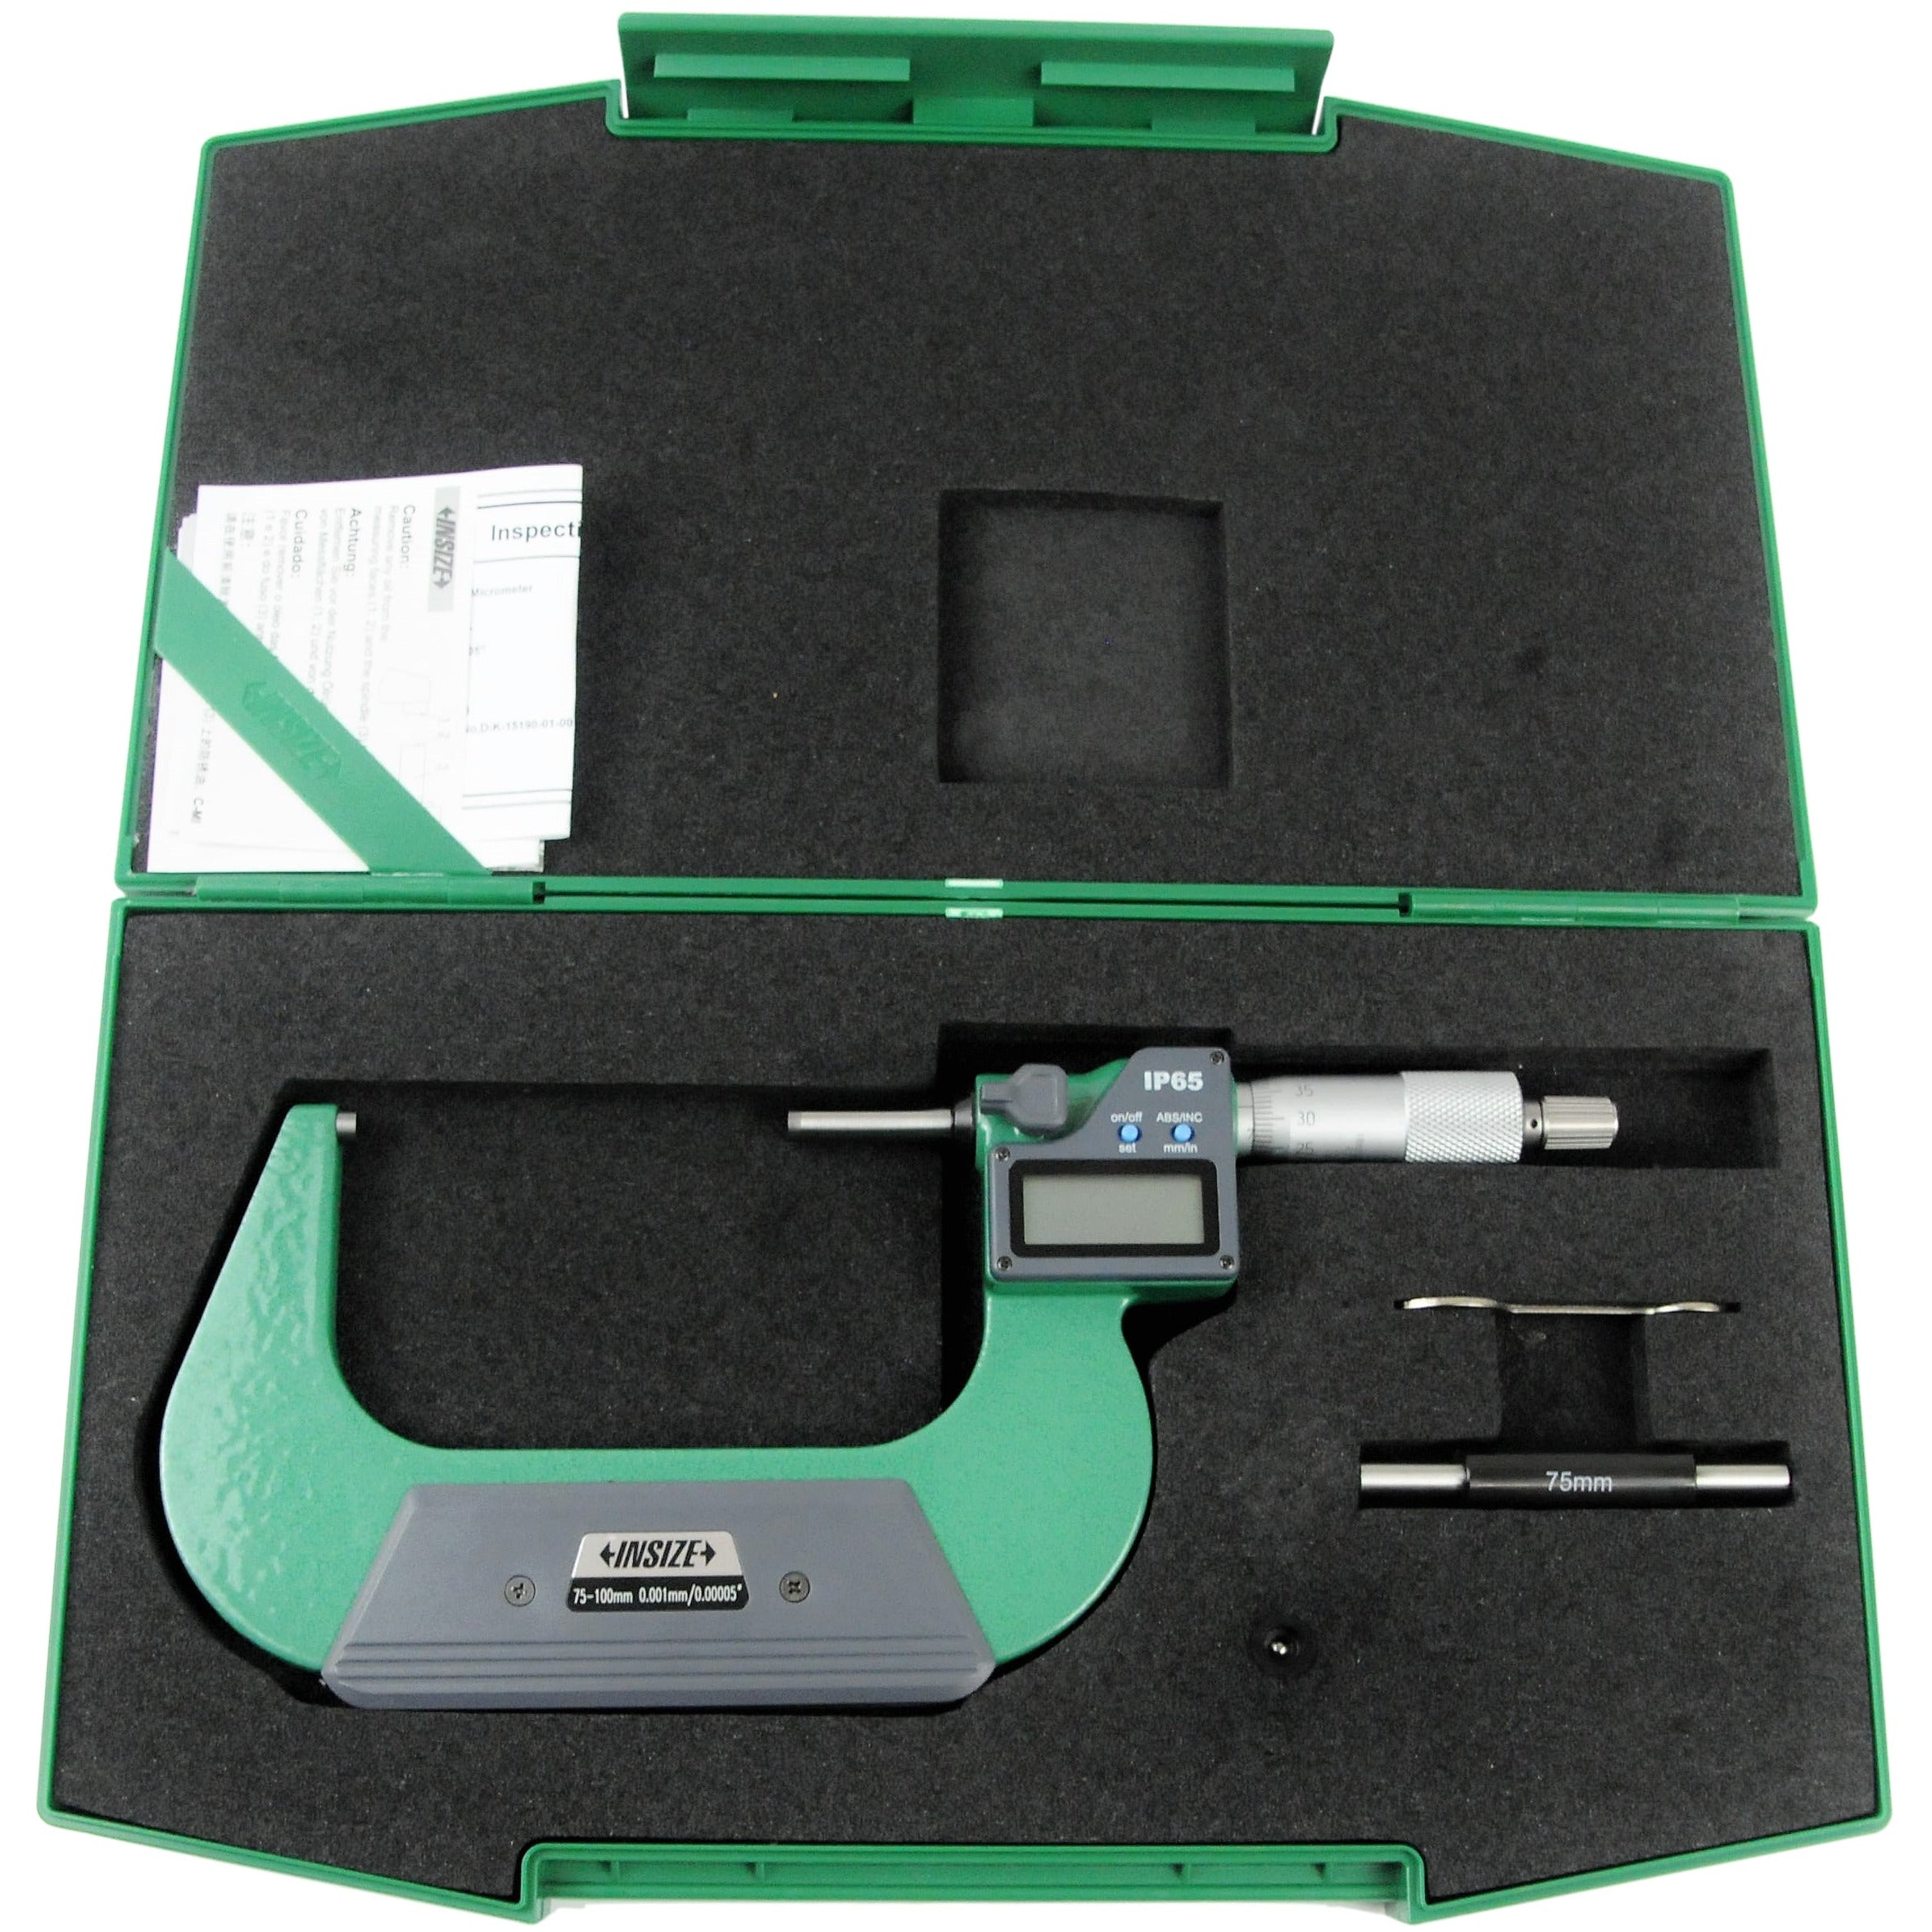 Insize IP65 Digital Outside Micrometer 75-100MM / 4-5"Range Series 3101-110A